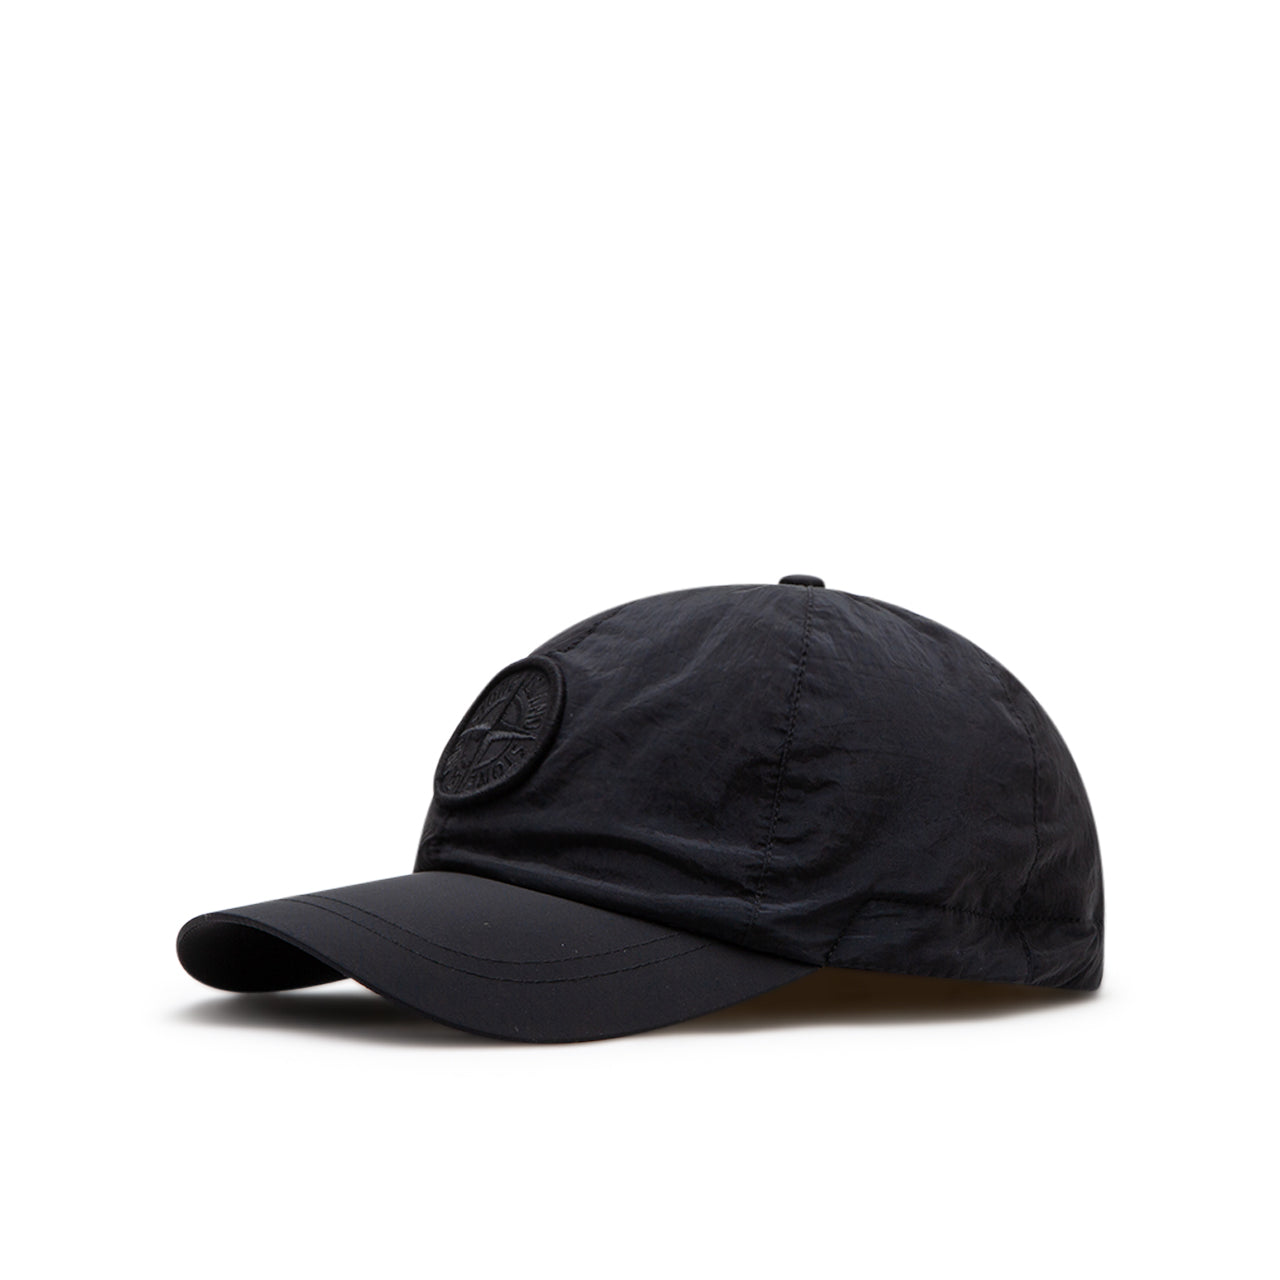 stone island nylon cap (black)